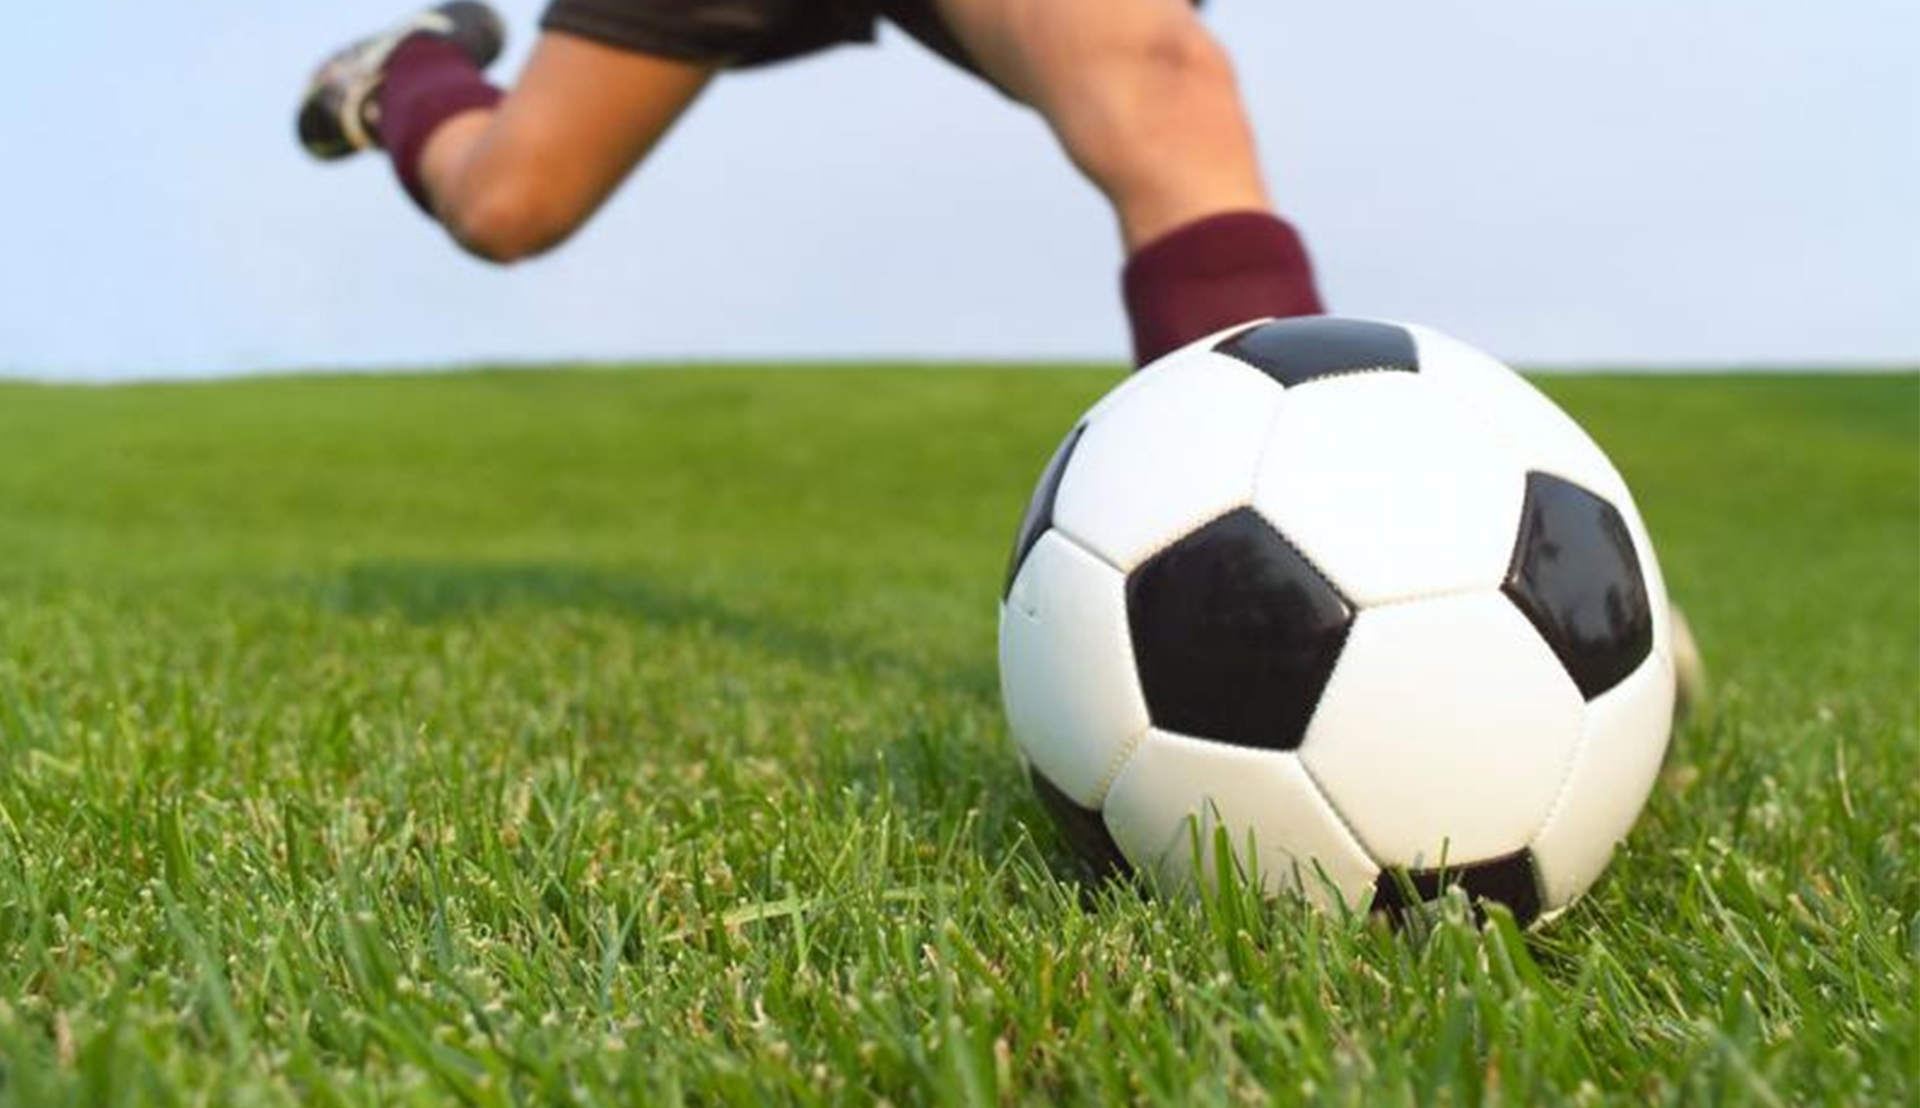 Rutgers Global - IFP Soccer Game 2018, kicking soccer ball on grass